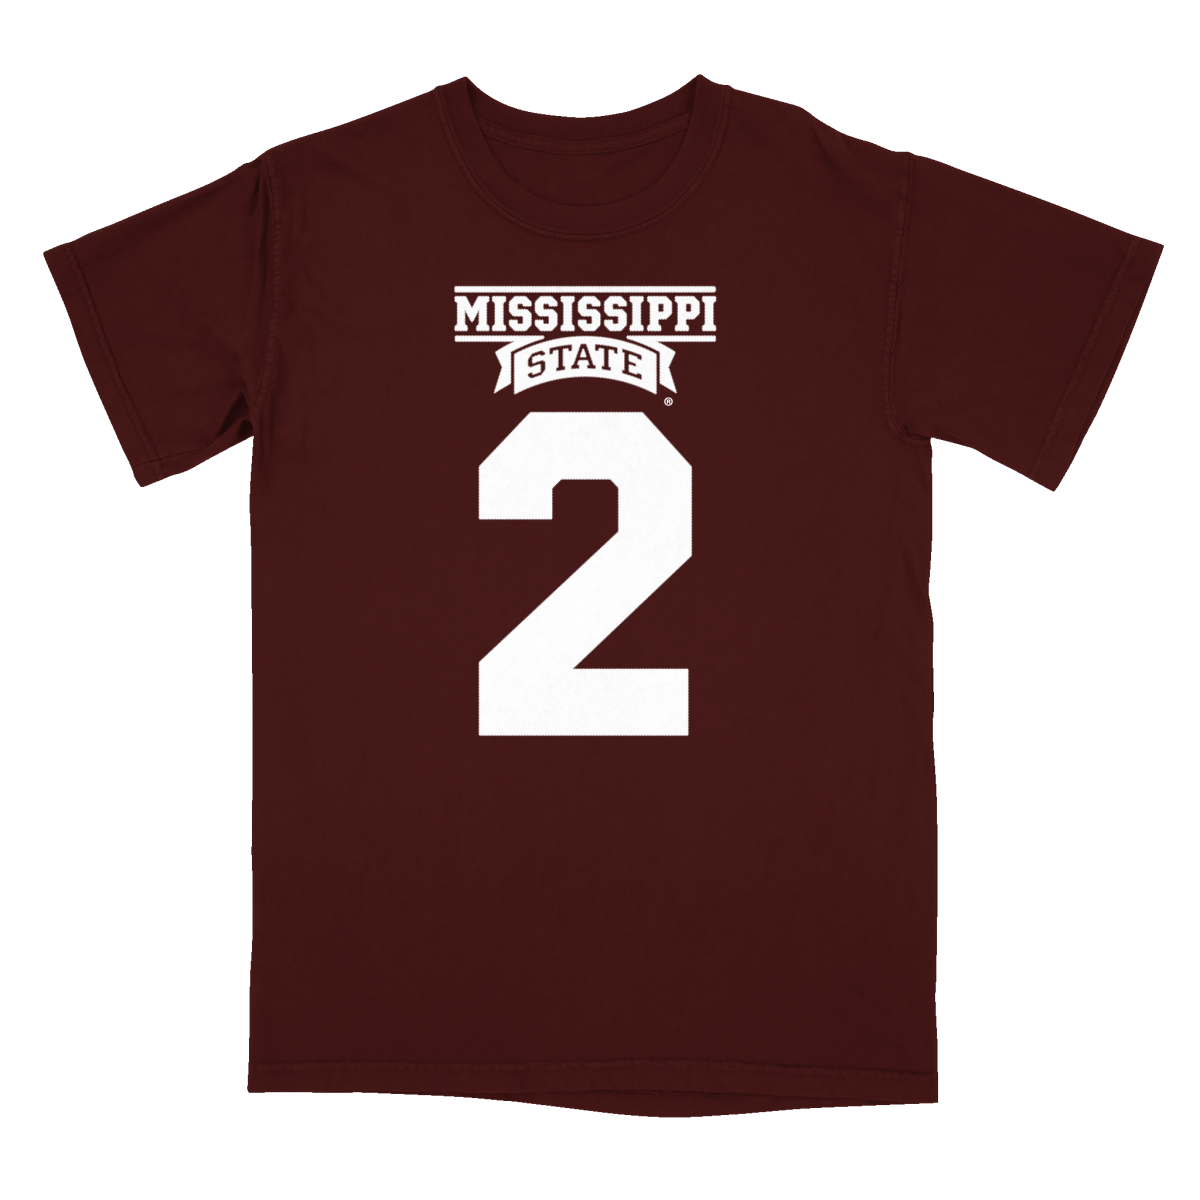 Will Rogers Maroon Jersey T-shirt - Shop B-Unlimited